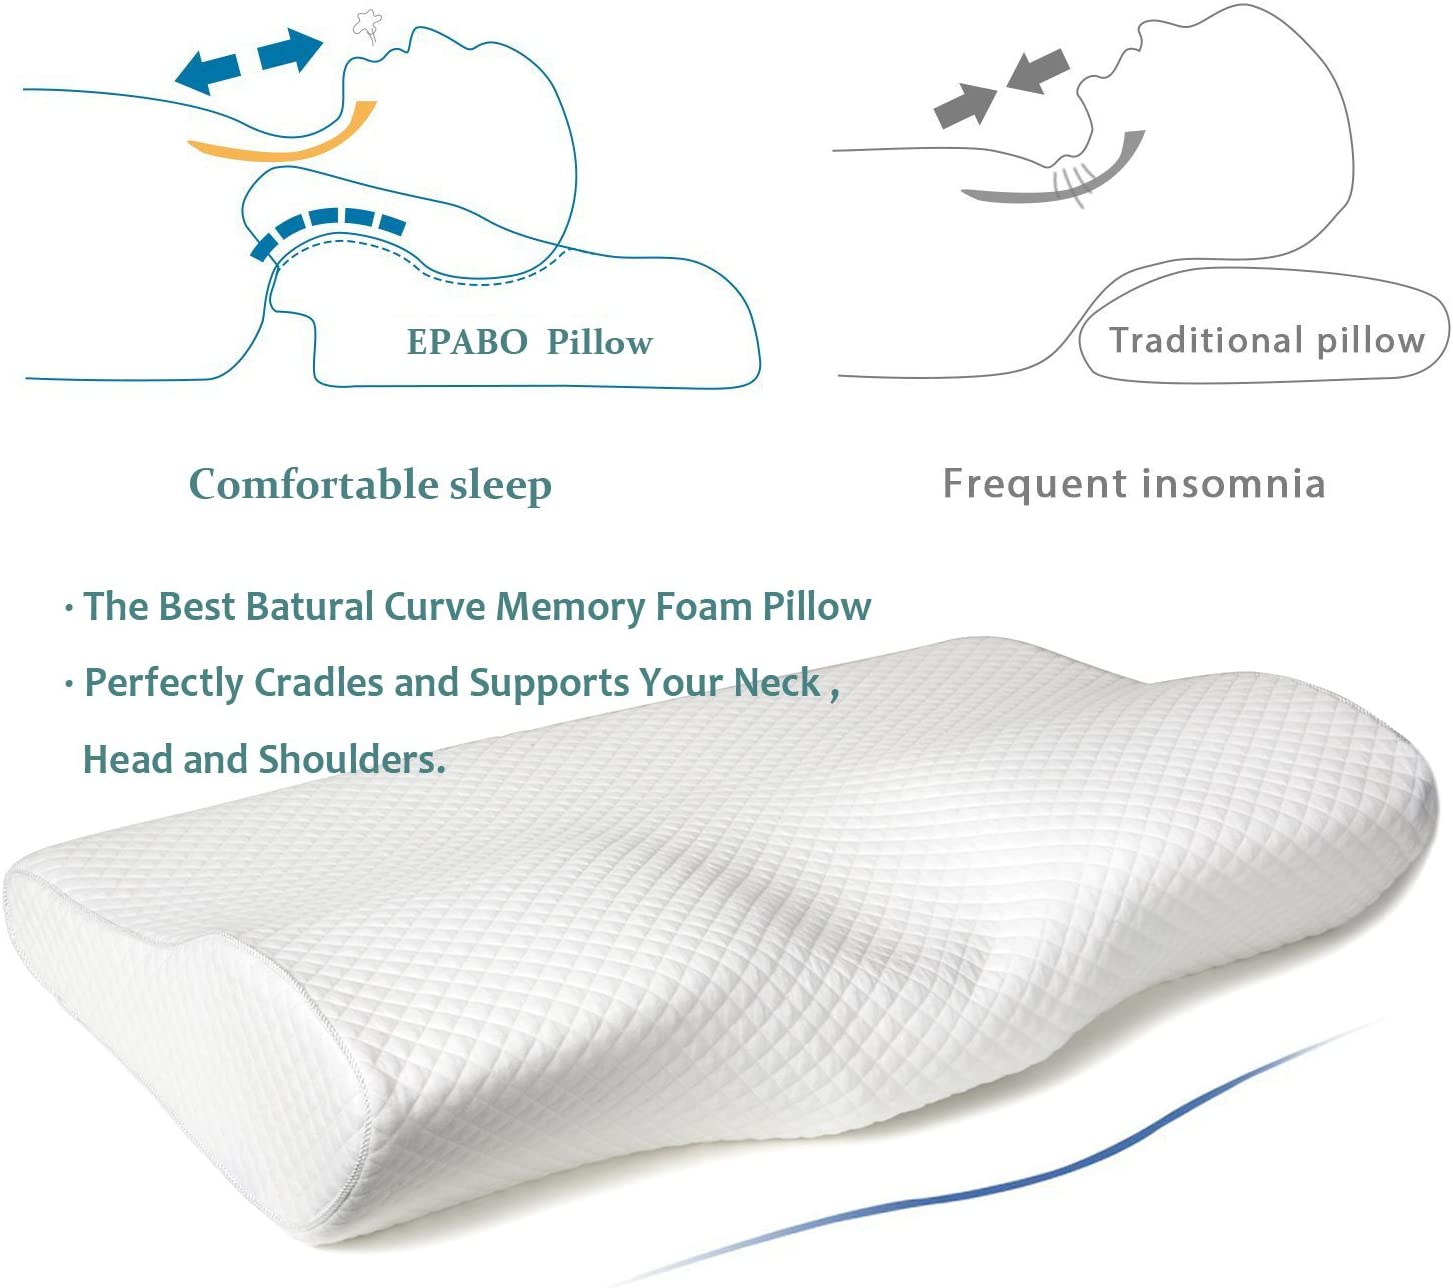 EPABO pillow image and description